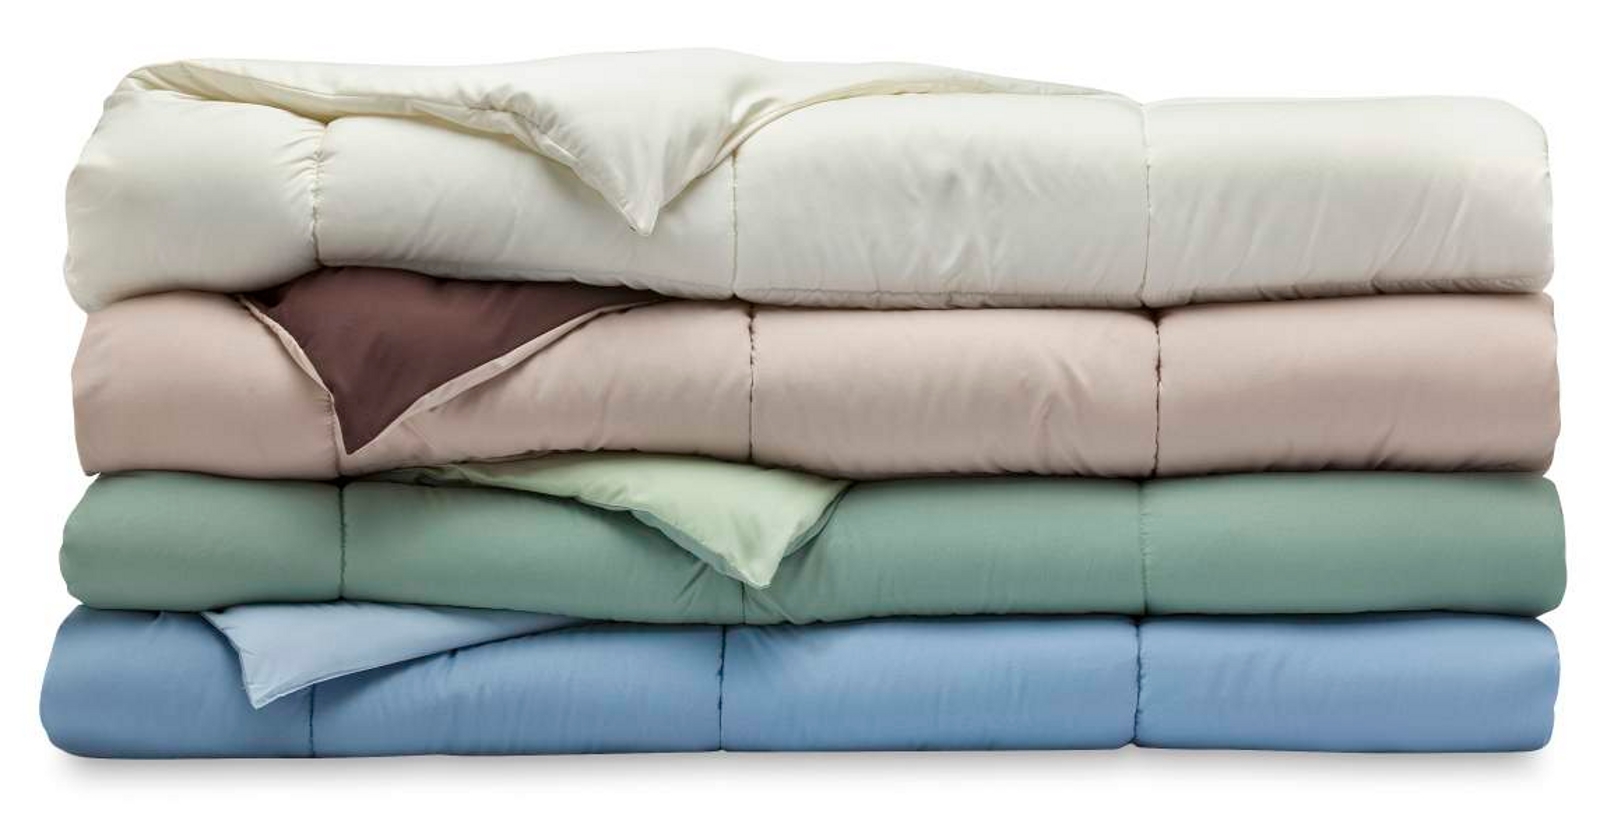 Colormate Full/Queen Size Plush Comforter